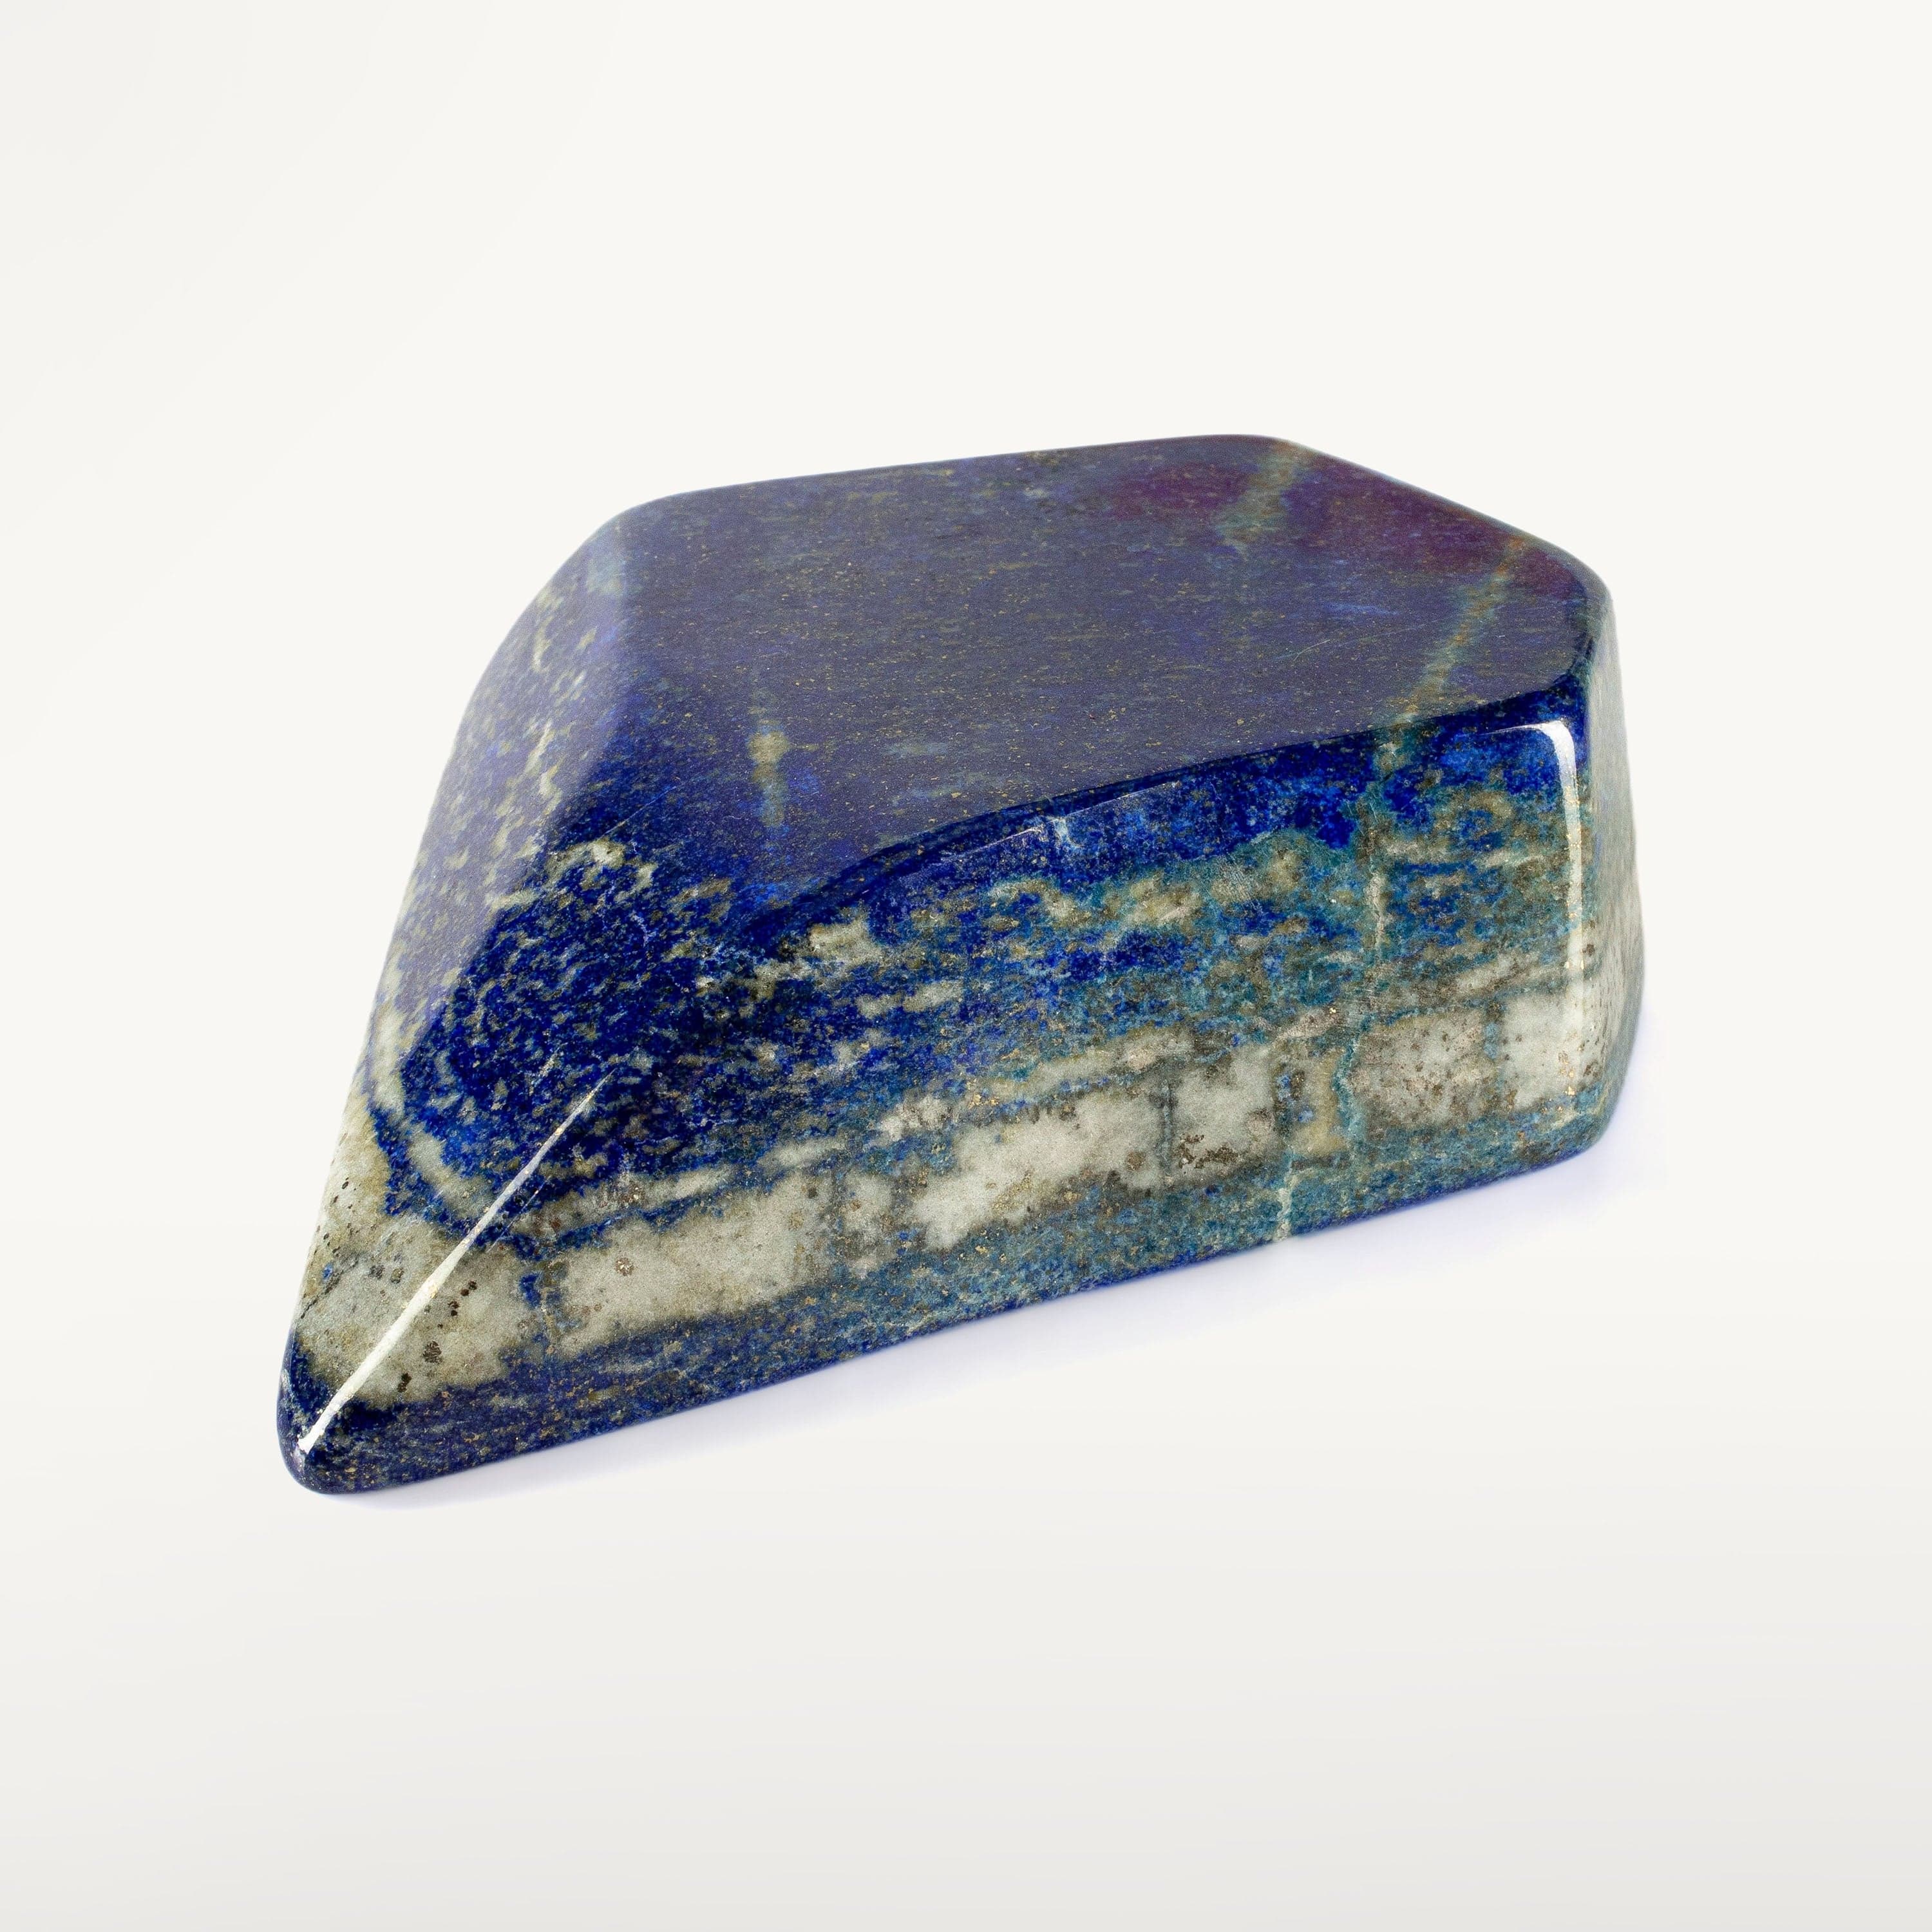 Kalifano Lapis Lapis Lazuli Freeform from Afghanistan - 6" / 1,290 grams LP1300.005